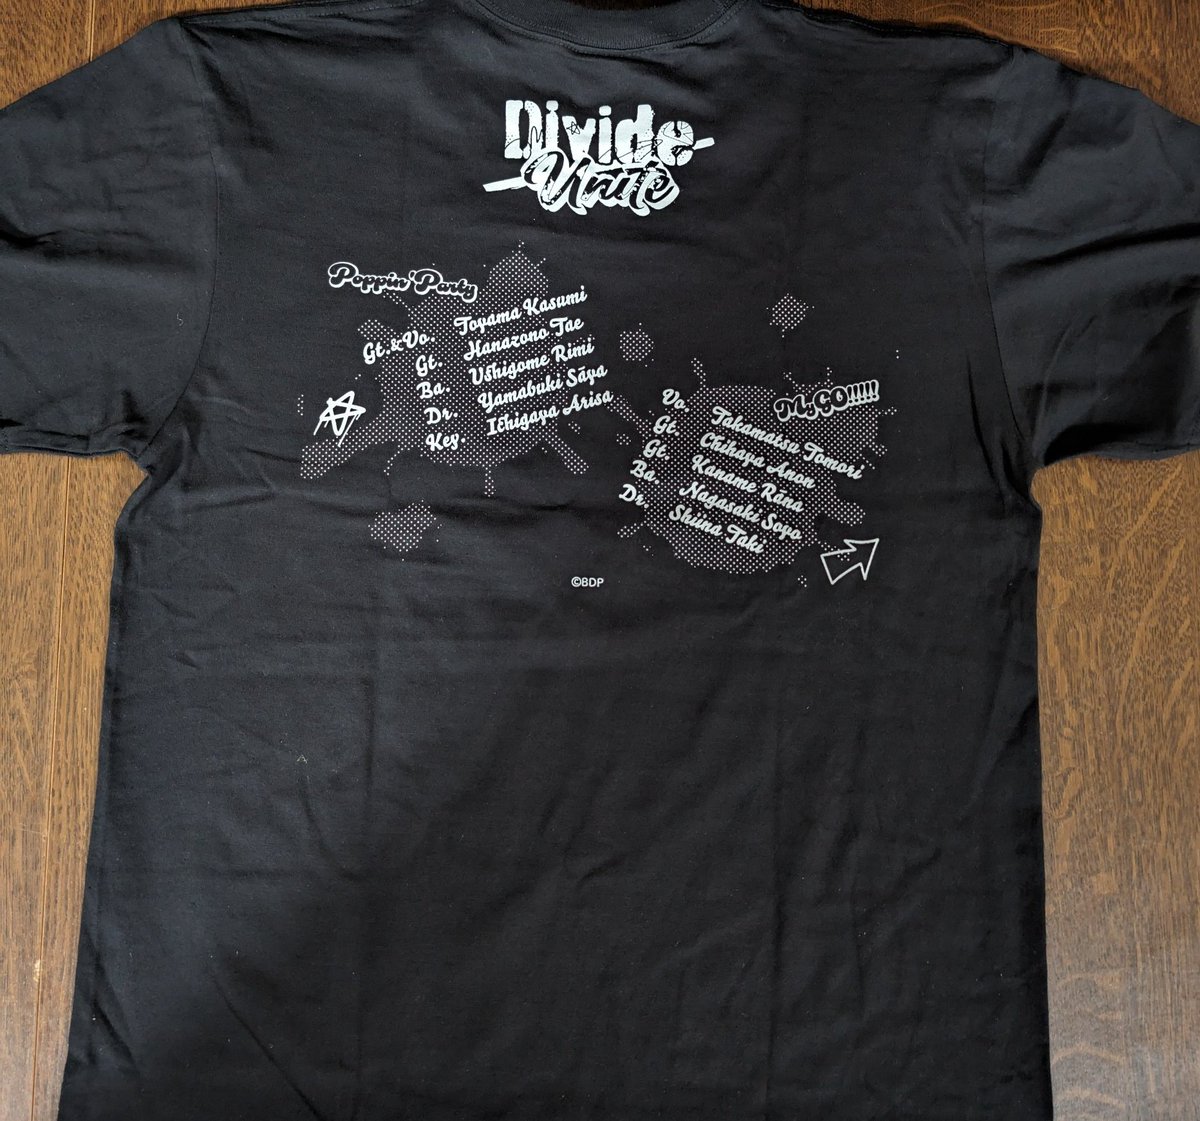 Unboxing chez @BushiM_info via @worldshoppingjp 👀
• Le guide Book「BanG Dream! It's MyGO!!!!!」!
• [CD/Blu-ray] 1st single d'Ave Mujica 「素晴らしき世界 でも どこにもない場所」!
• [CD/Blu-ray] 6th Single de Morfonica「両翼のBrilliance」!
• Le t-shirt du LIVE「Divide Unite」!